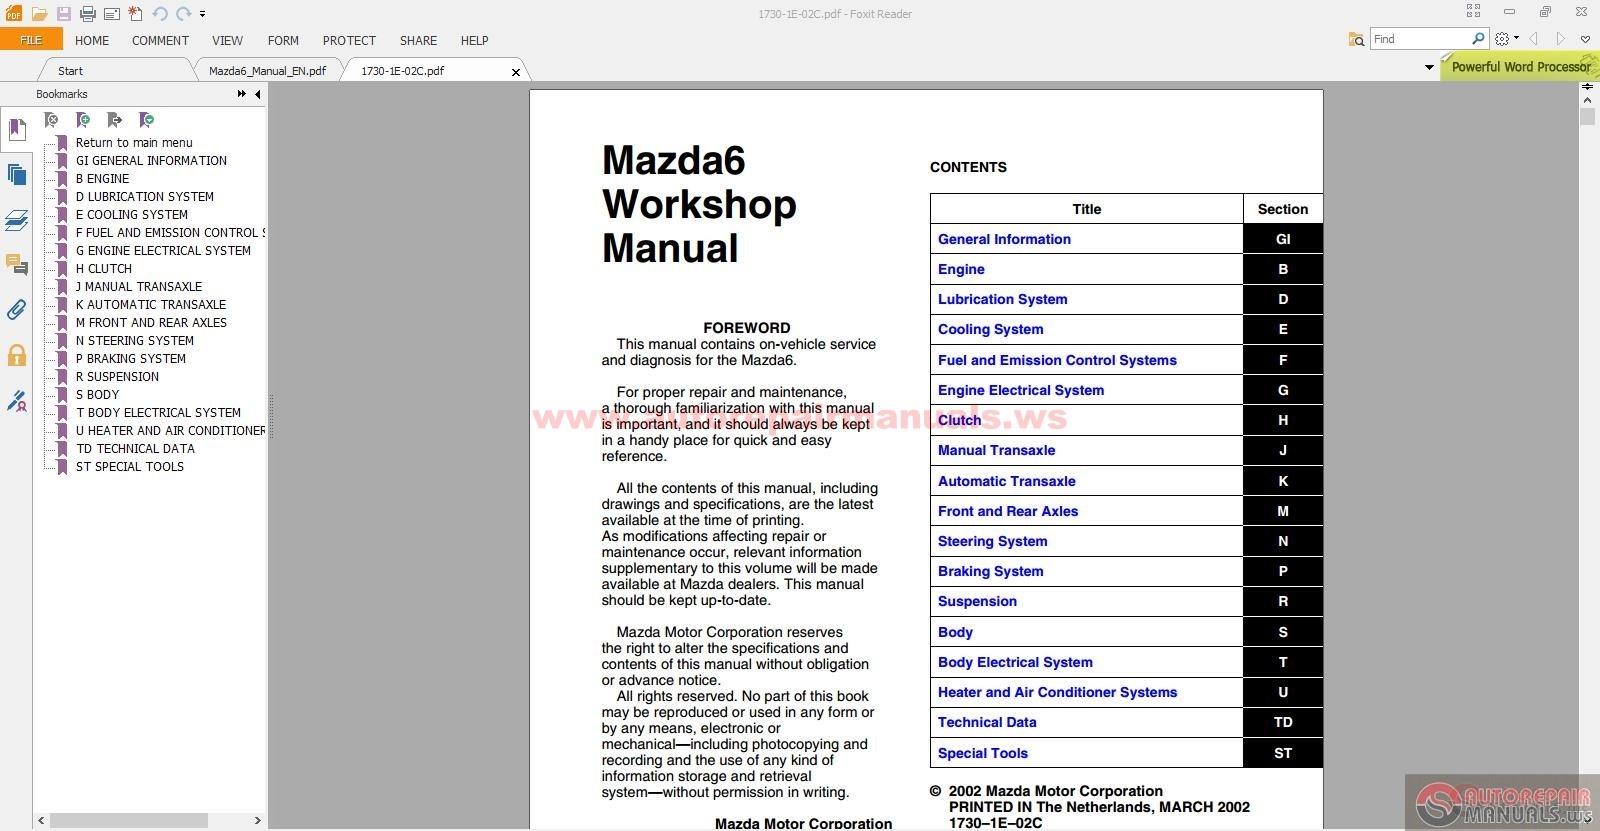 Keygen Autorepairmanuals.ws Mazda 6 Full Manual inc Engine Manual